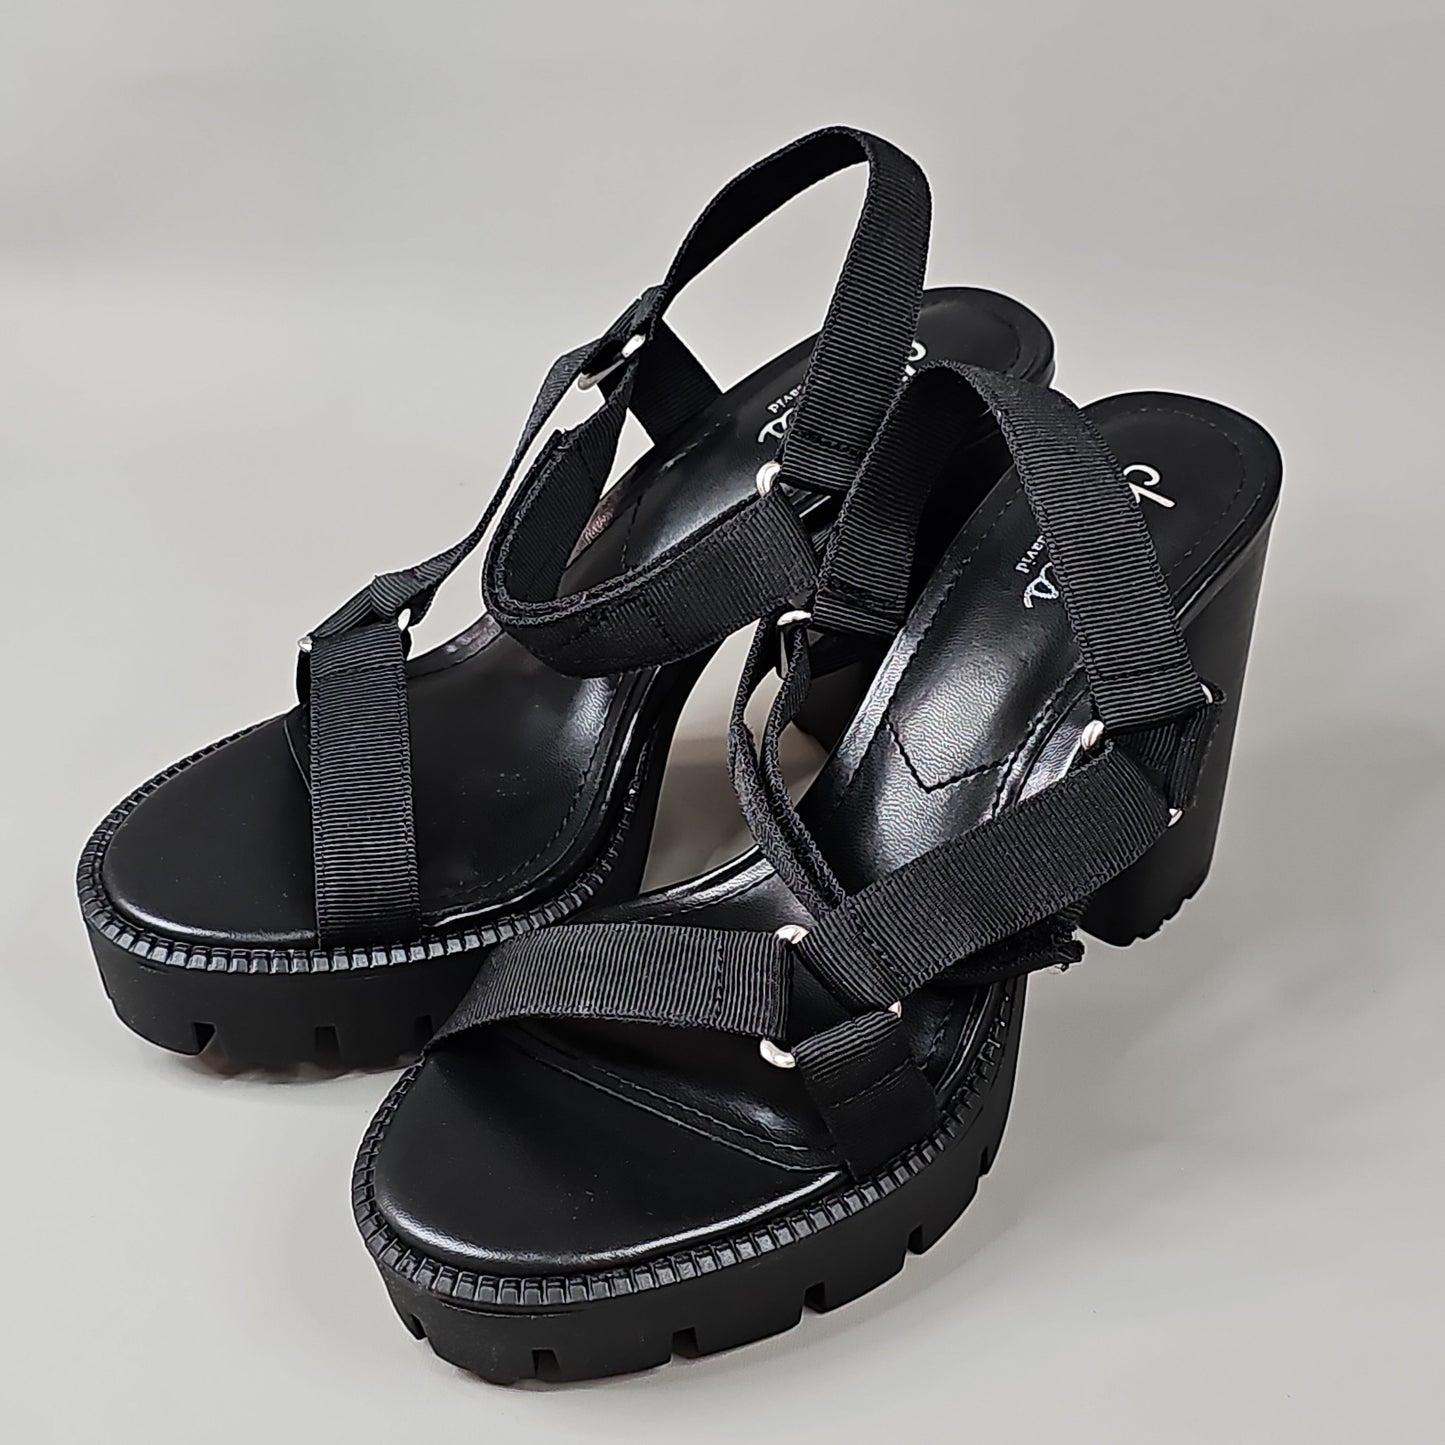 CHARLES BY CHARLES DAVID Women's Vast Sport Sandal Shoe Sz 7 M Black (New)